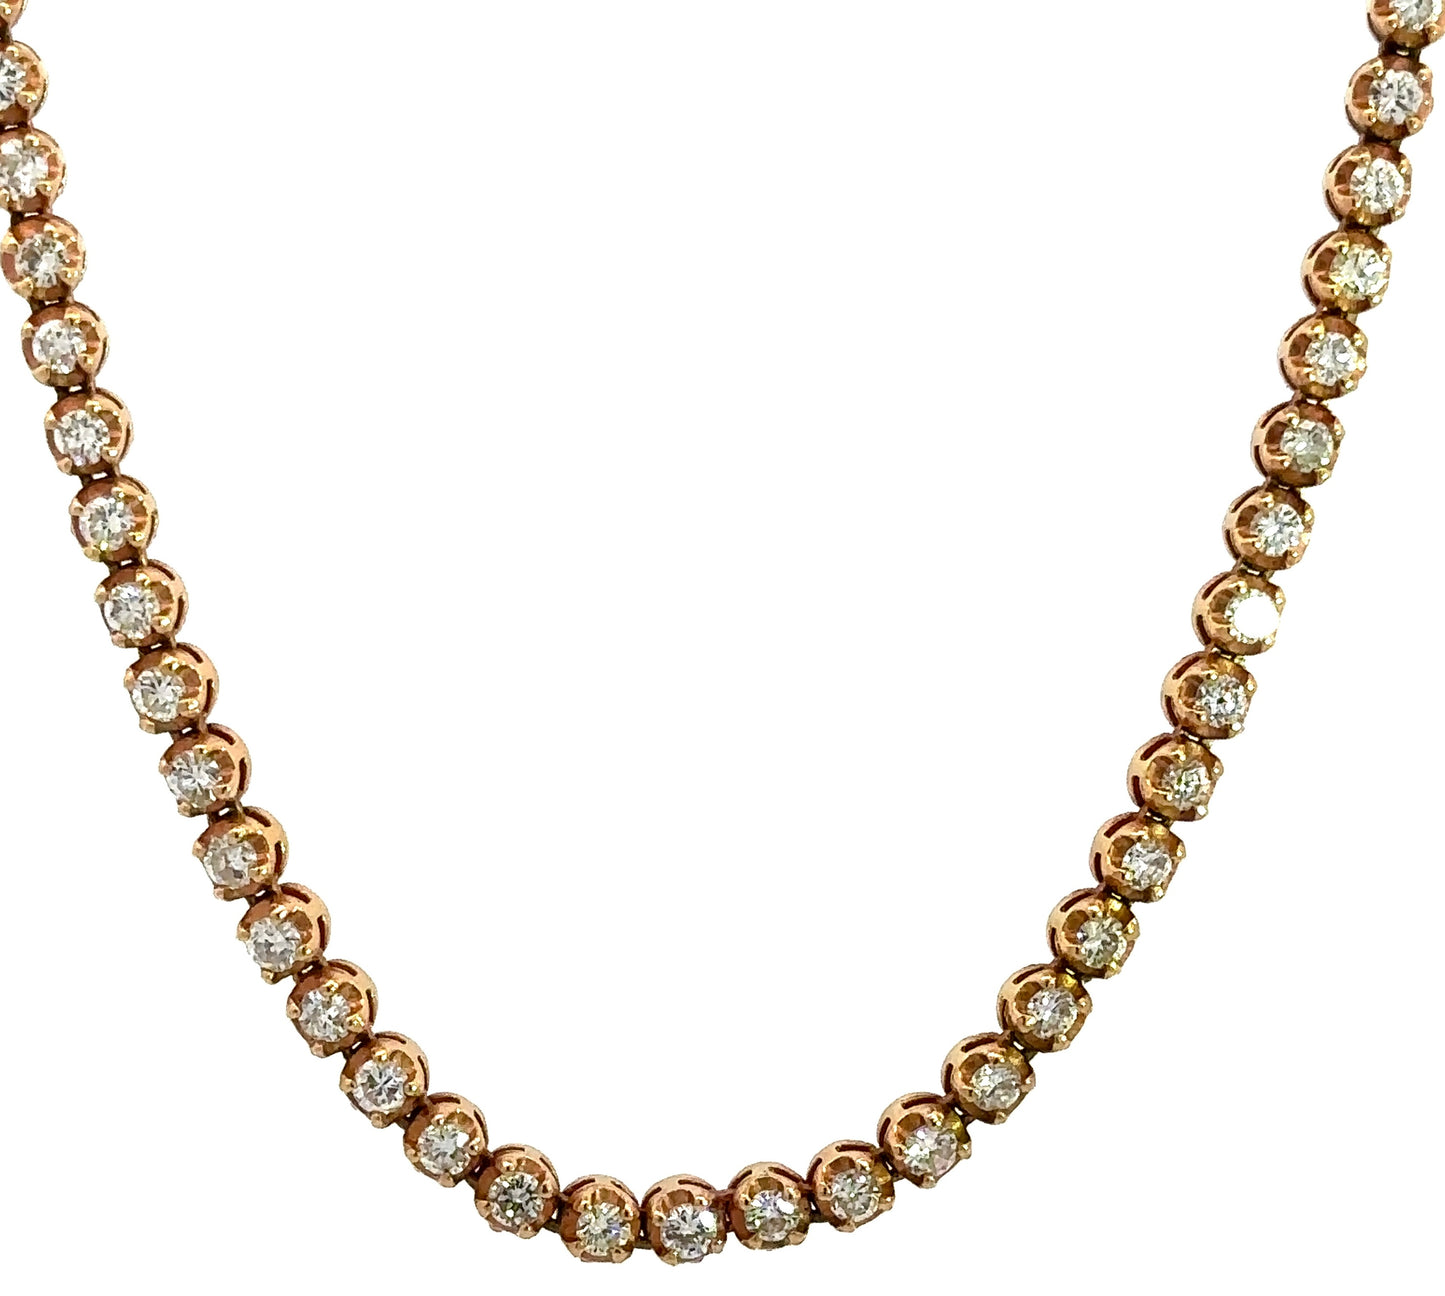 Hanging Rose Gold Diamond Necklace with round diamonds